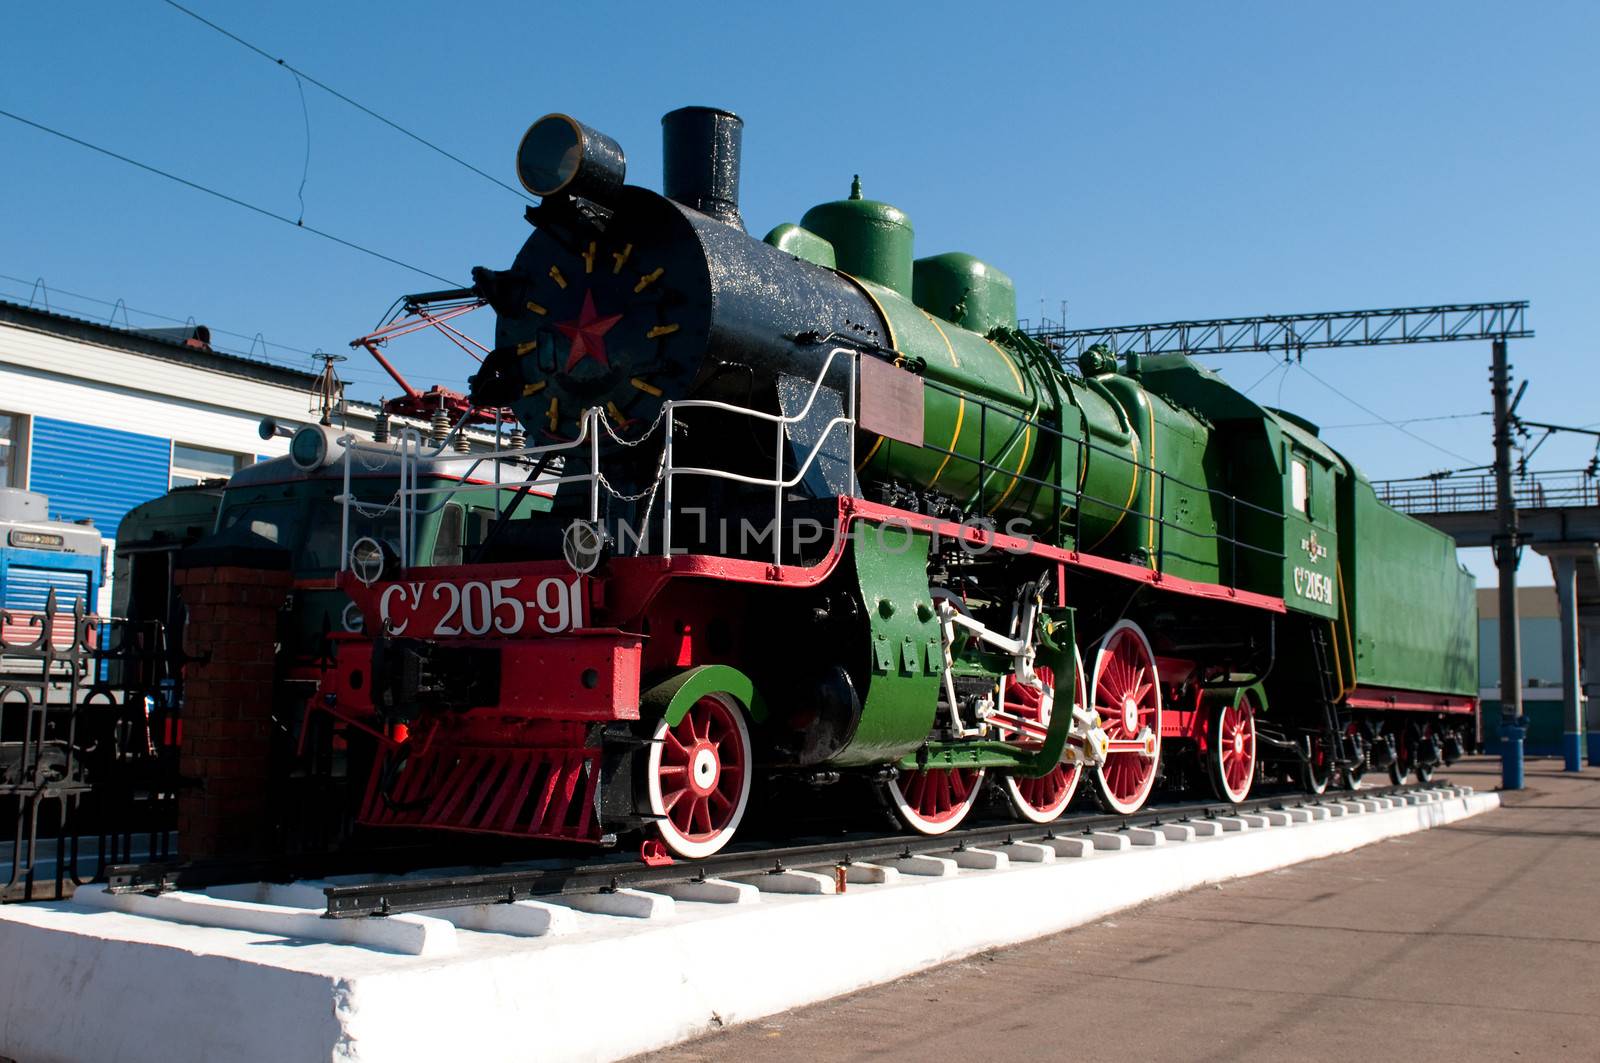 Monument of old steam locomotive. Ulan-Ude, capital city of the Buryat Republic, Russia